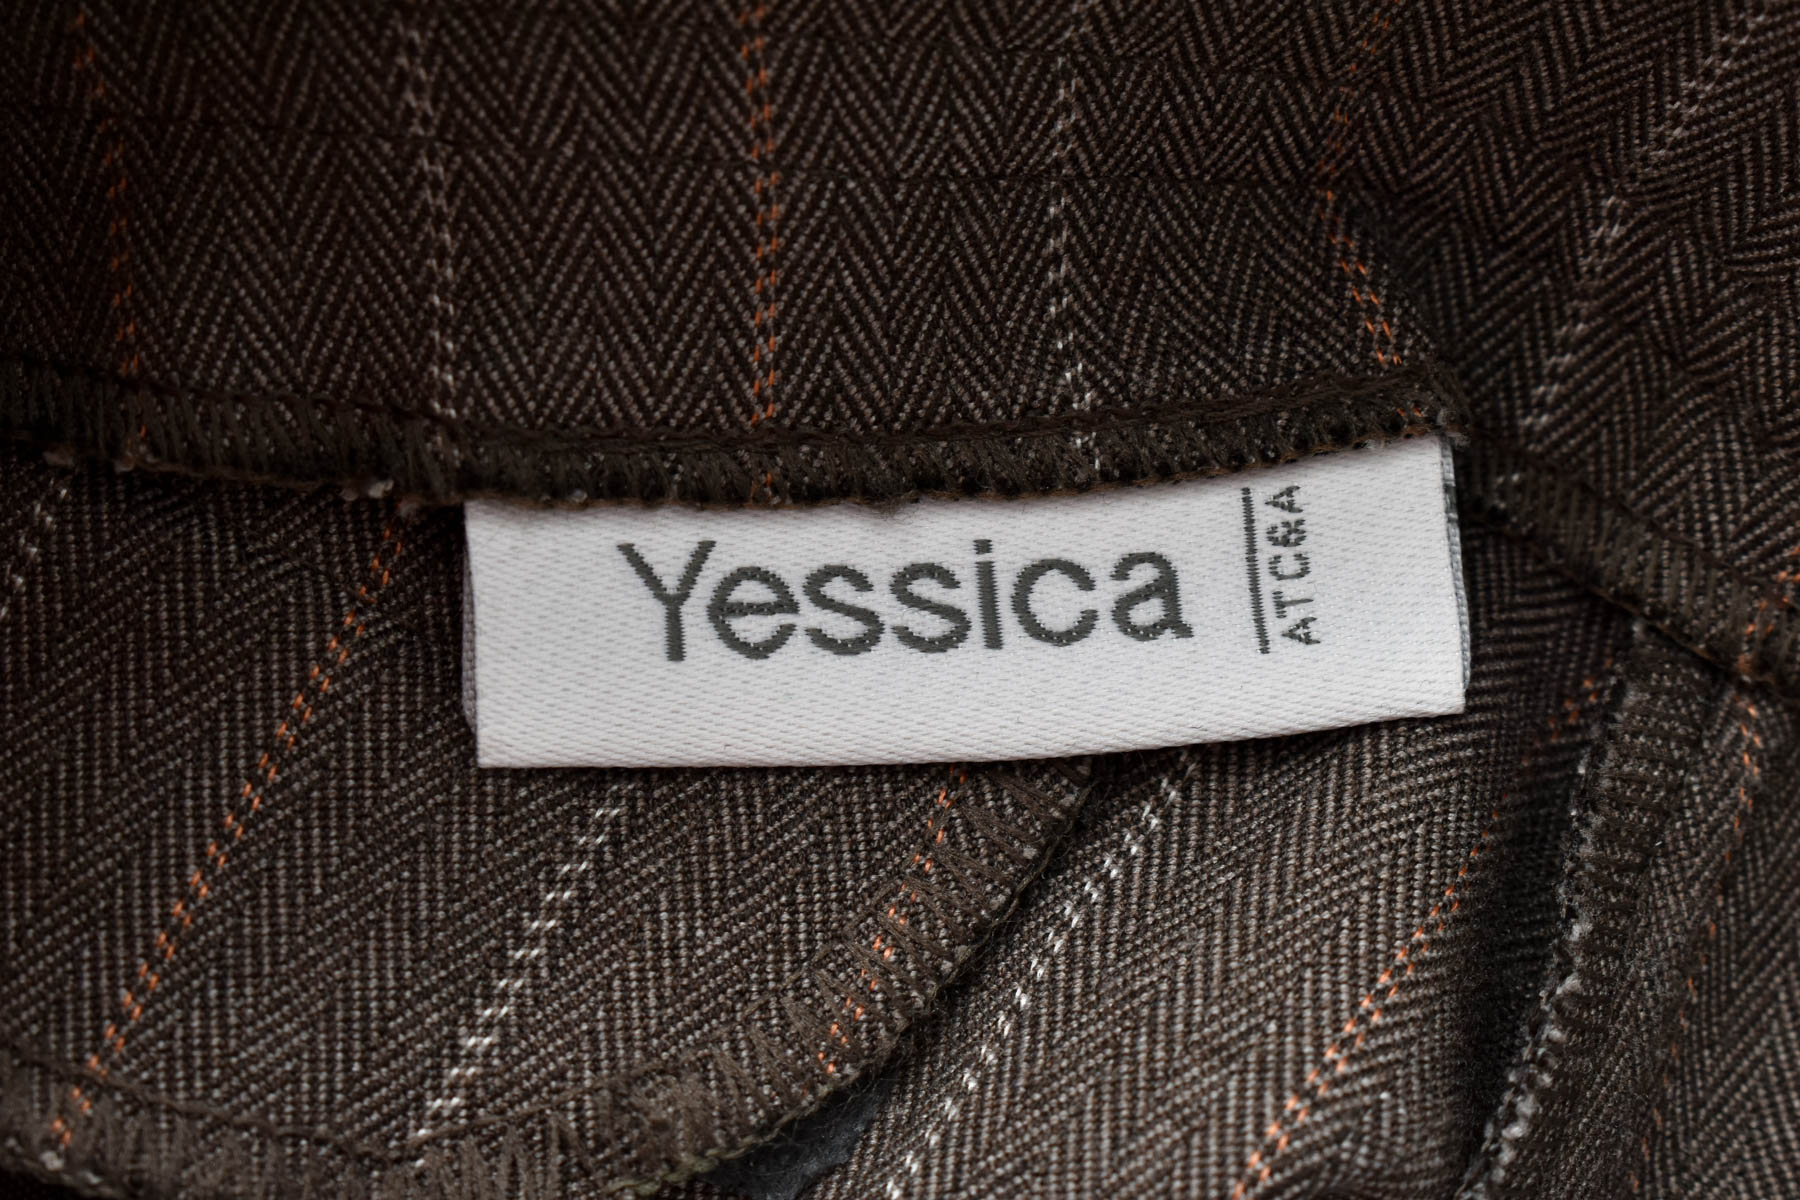 Women's trousers - Yessica - 2